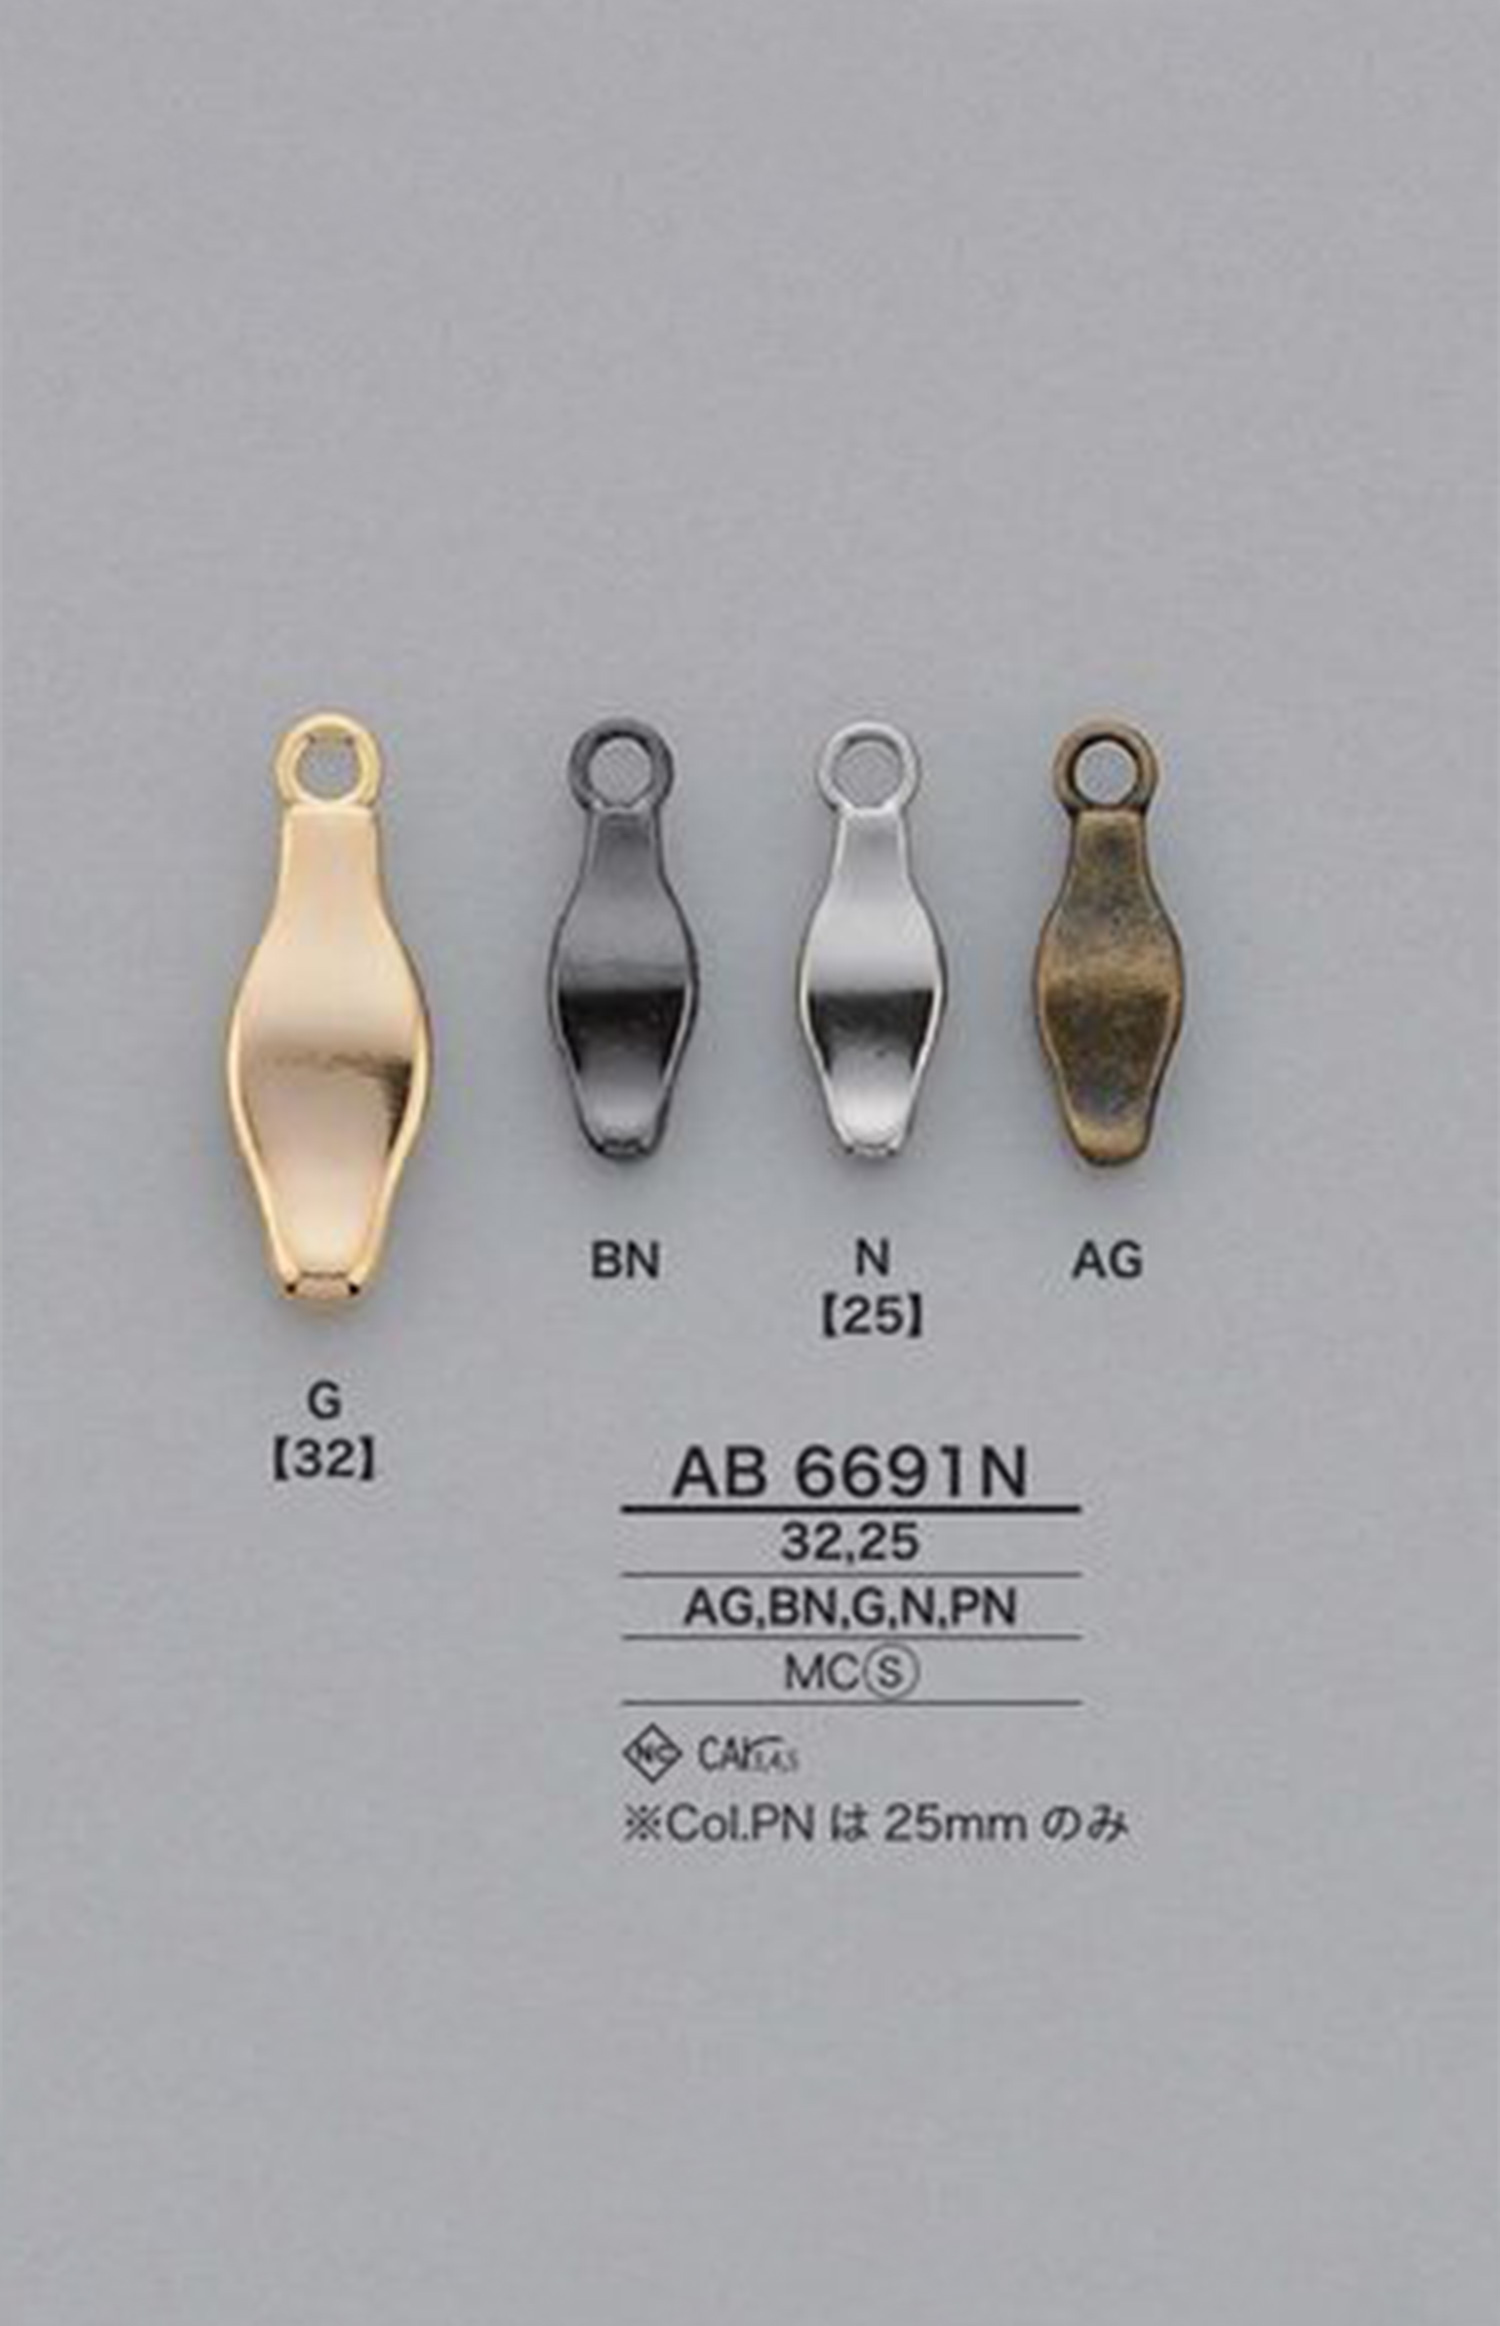 AB6691N Zipper Point (Pull Tab) IRIS